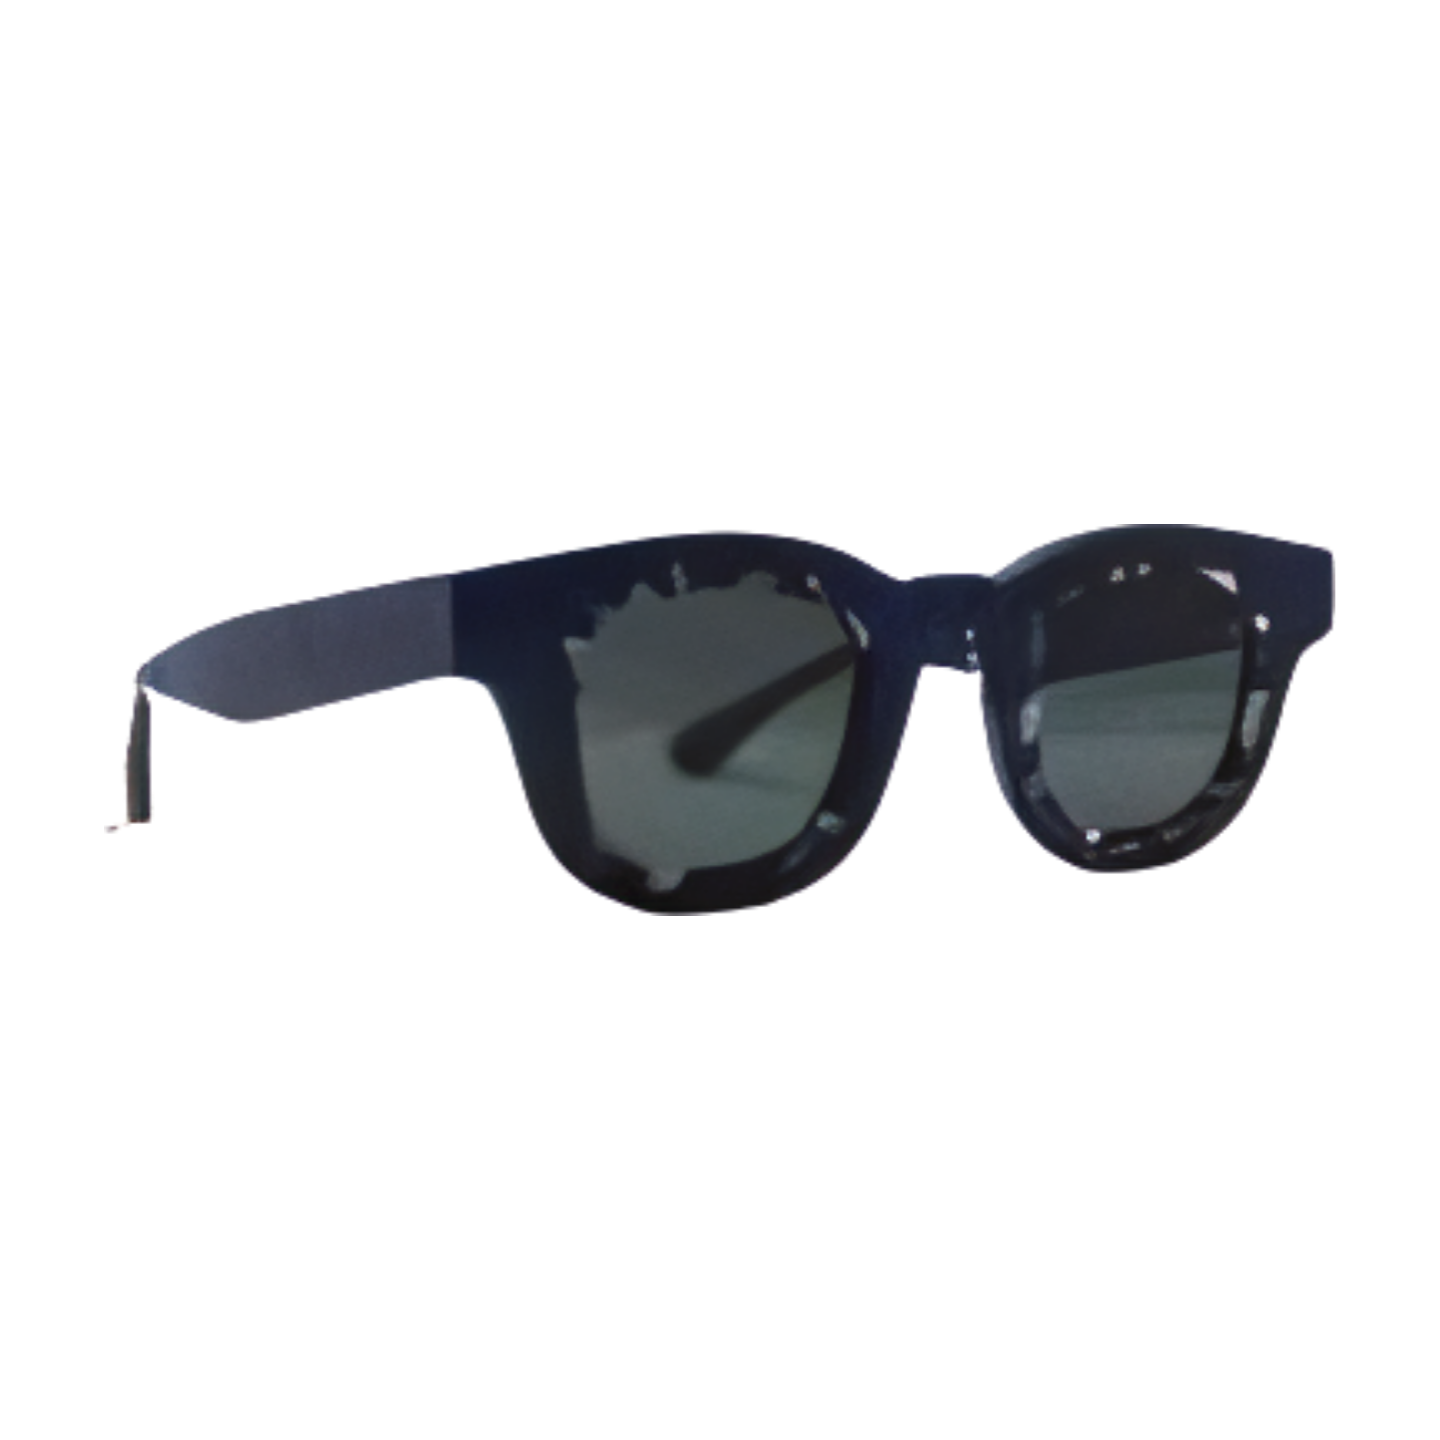 Thierry Lasry X Paris Saint Germain Sunglasses